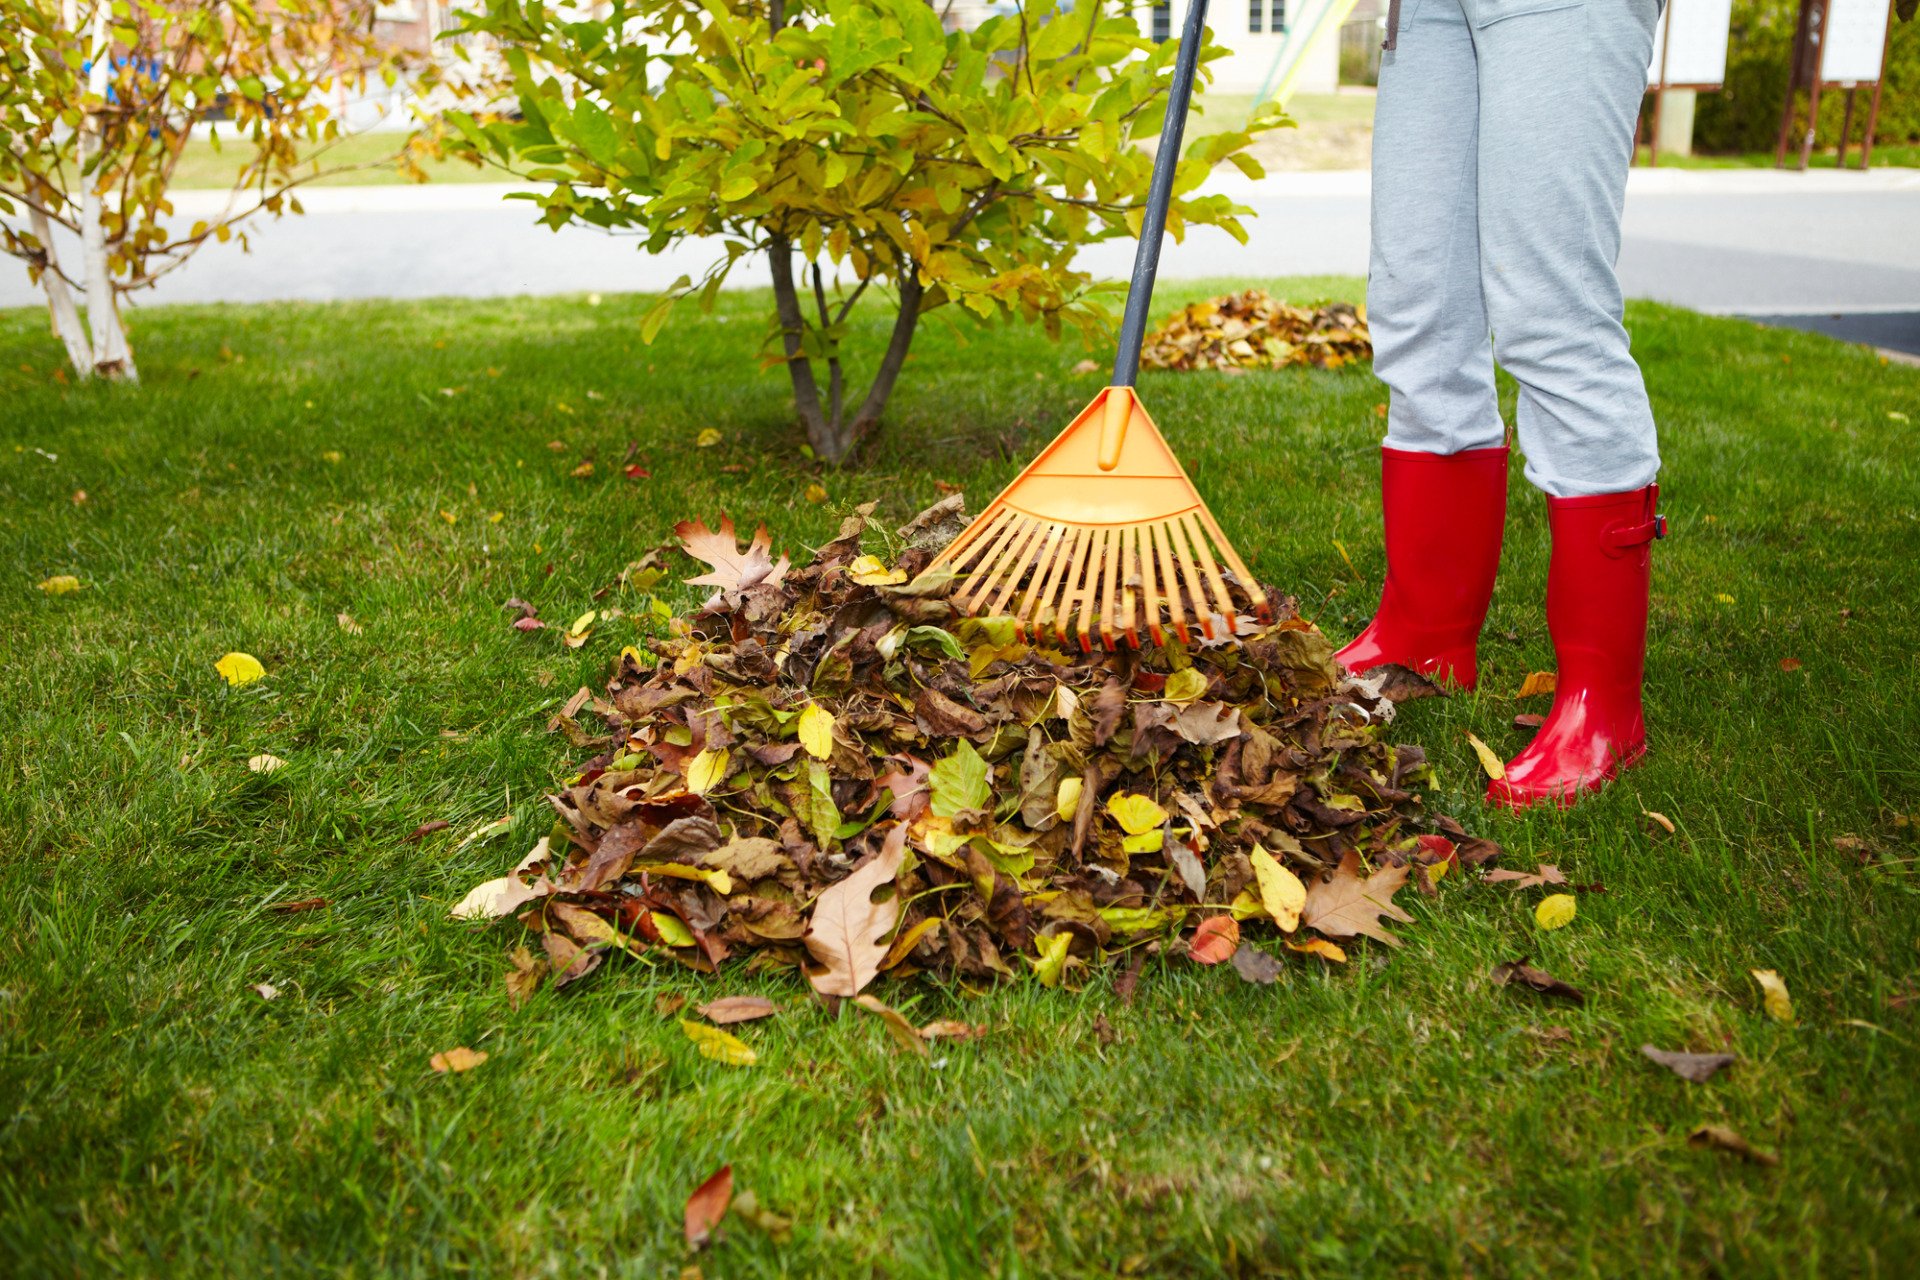 raking leaves - autumn lawn care